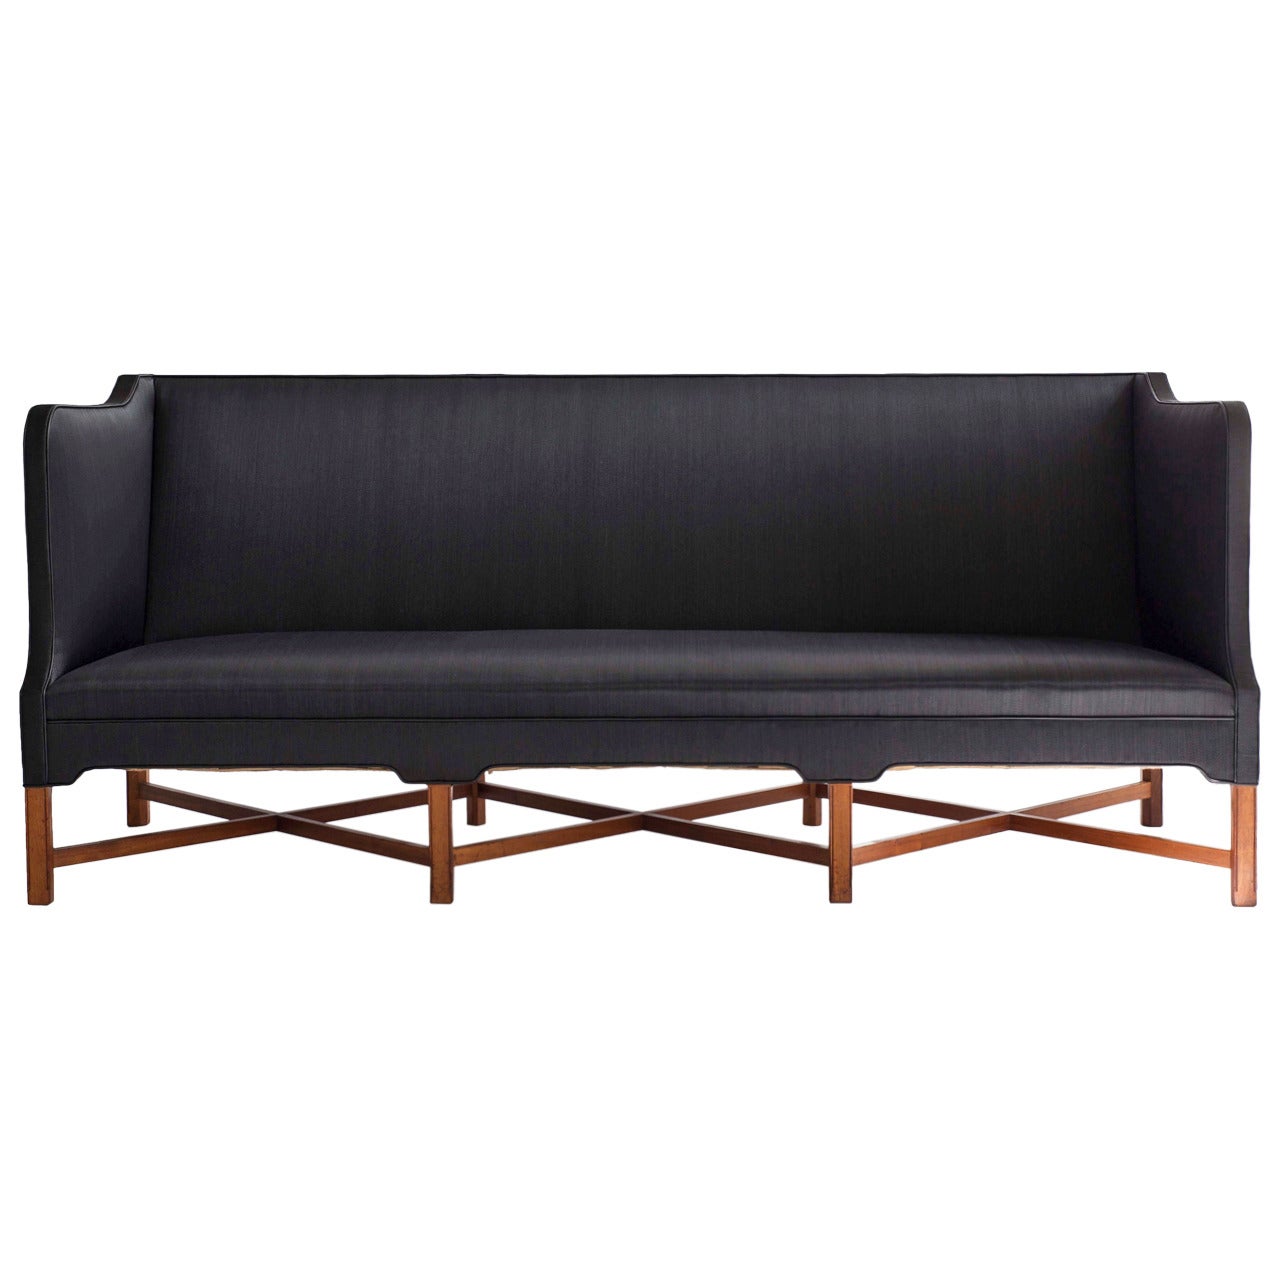 Freestanding Kaare Klint Sofa with Horsehair